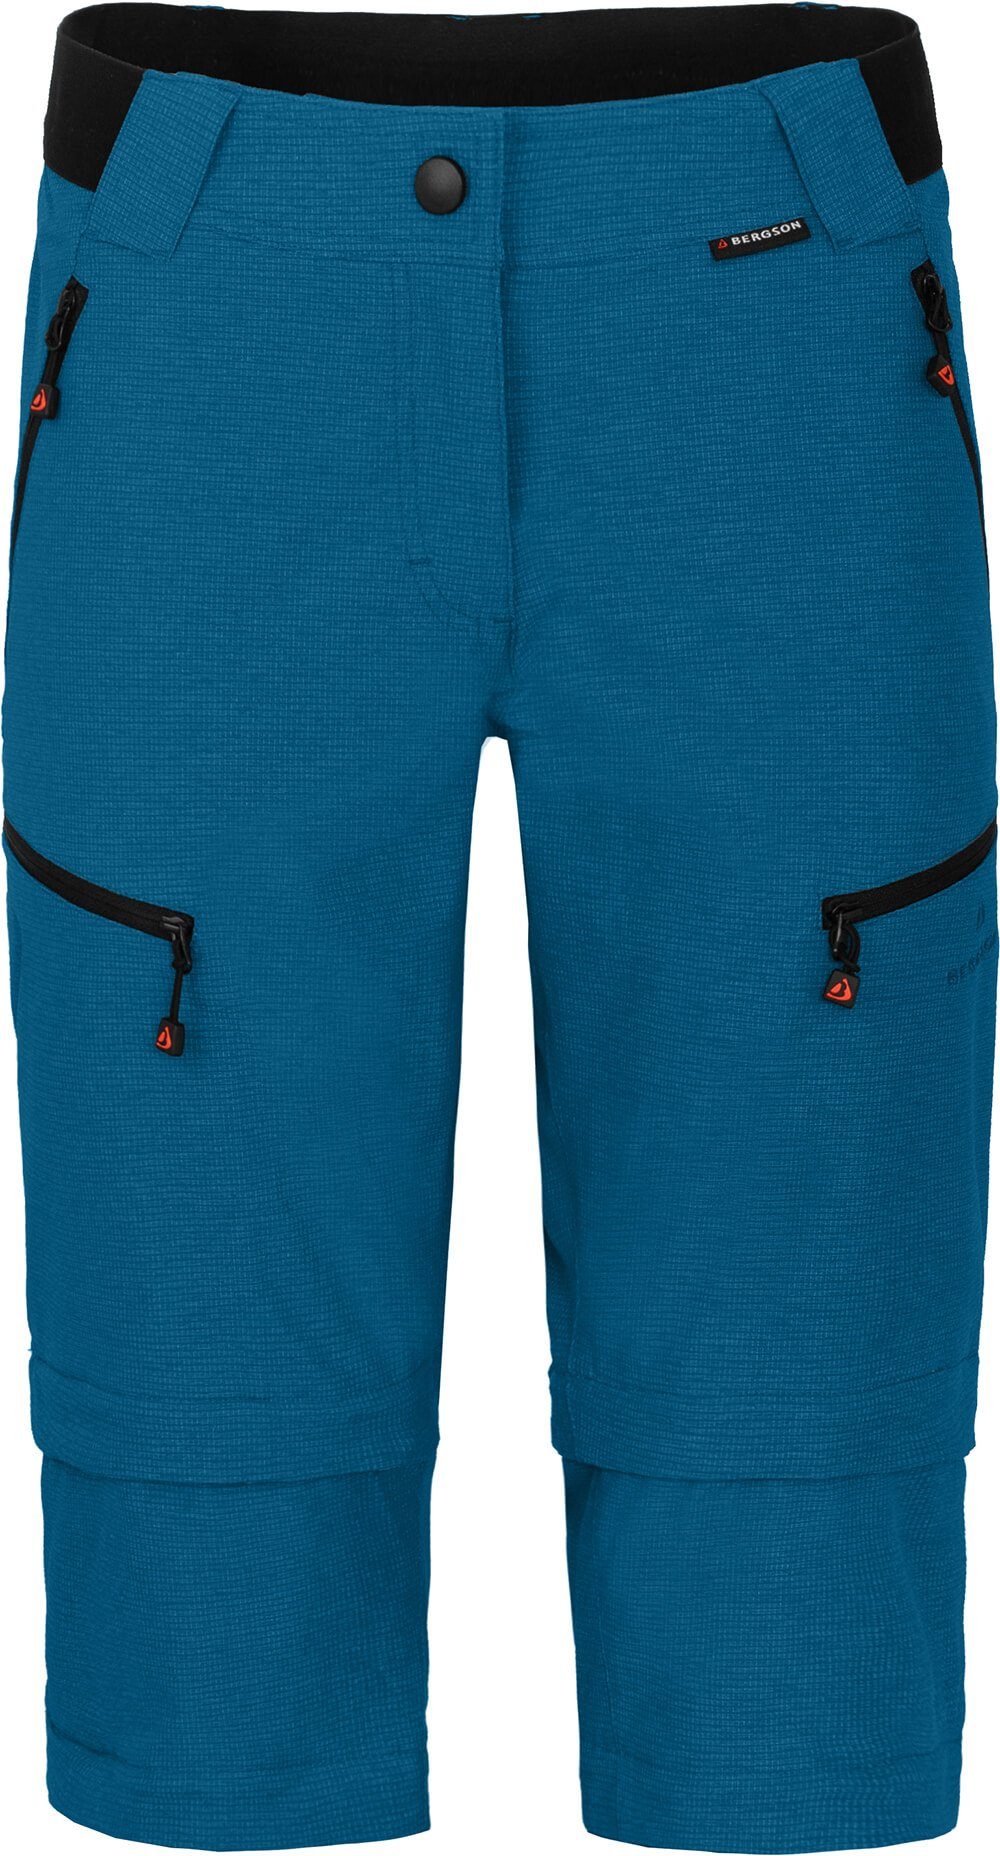 Doppel PORI Zip-off-Hose T-ZIPP Damen robust Zipp-Off blau Saphir Bergson Wanderhose, elastisch, mit Normalgrößen,